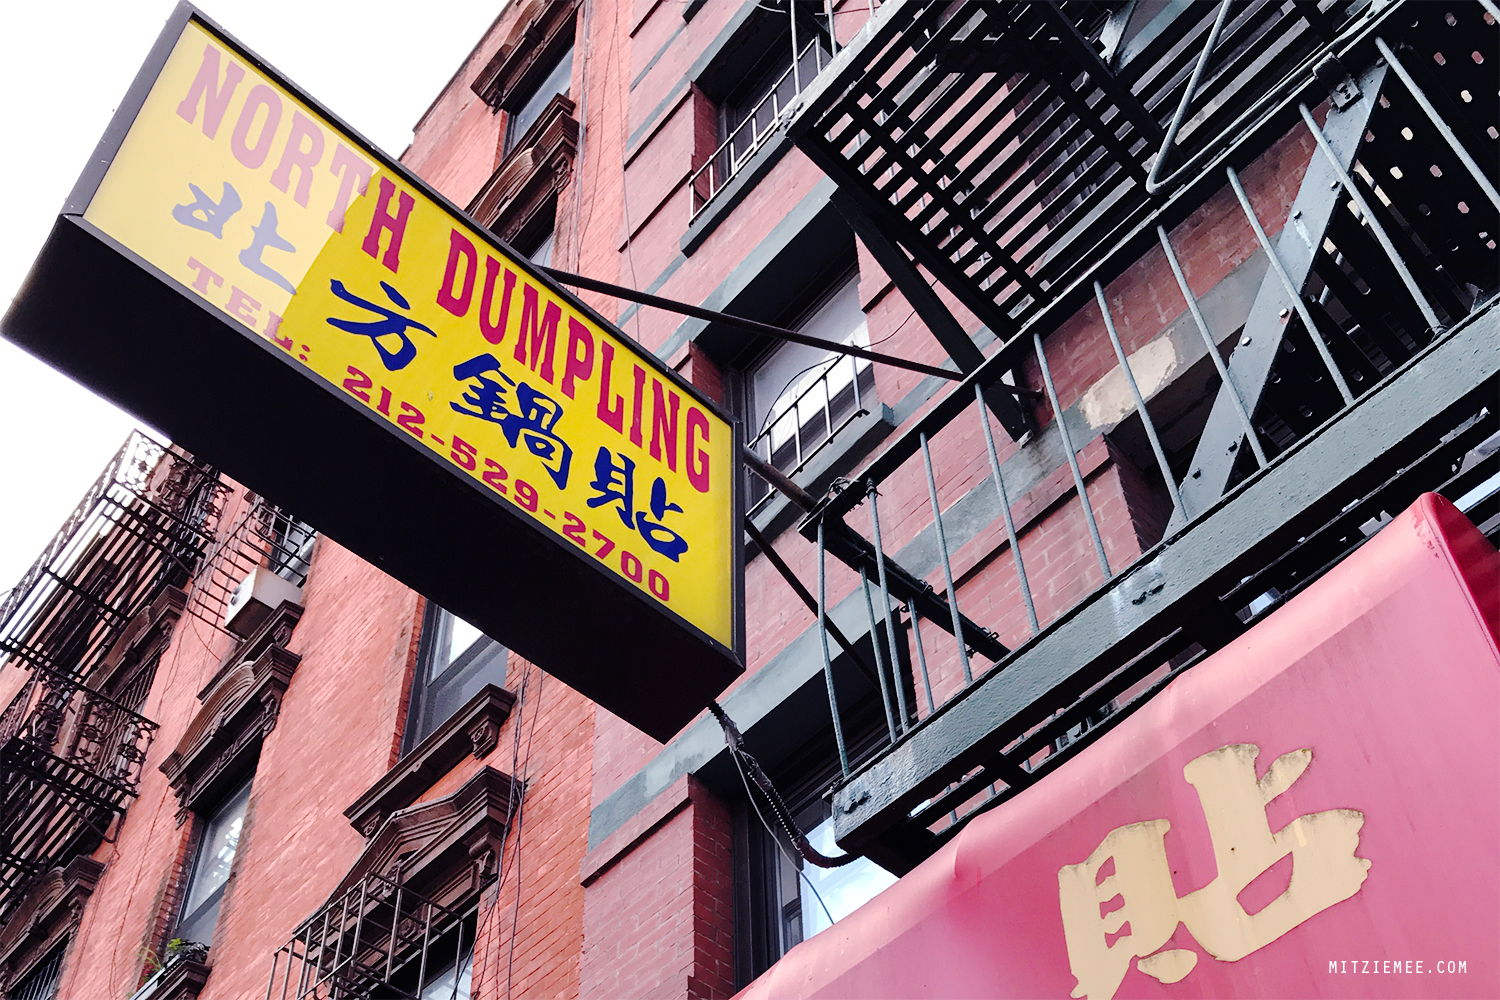 North Dumpling, NYC